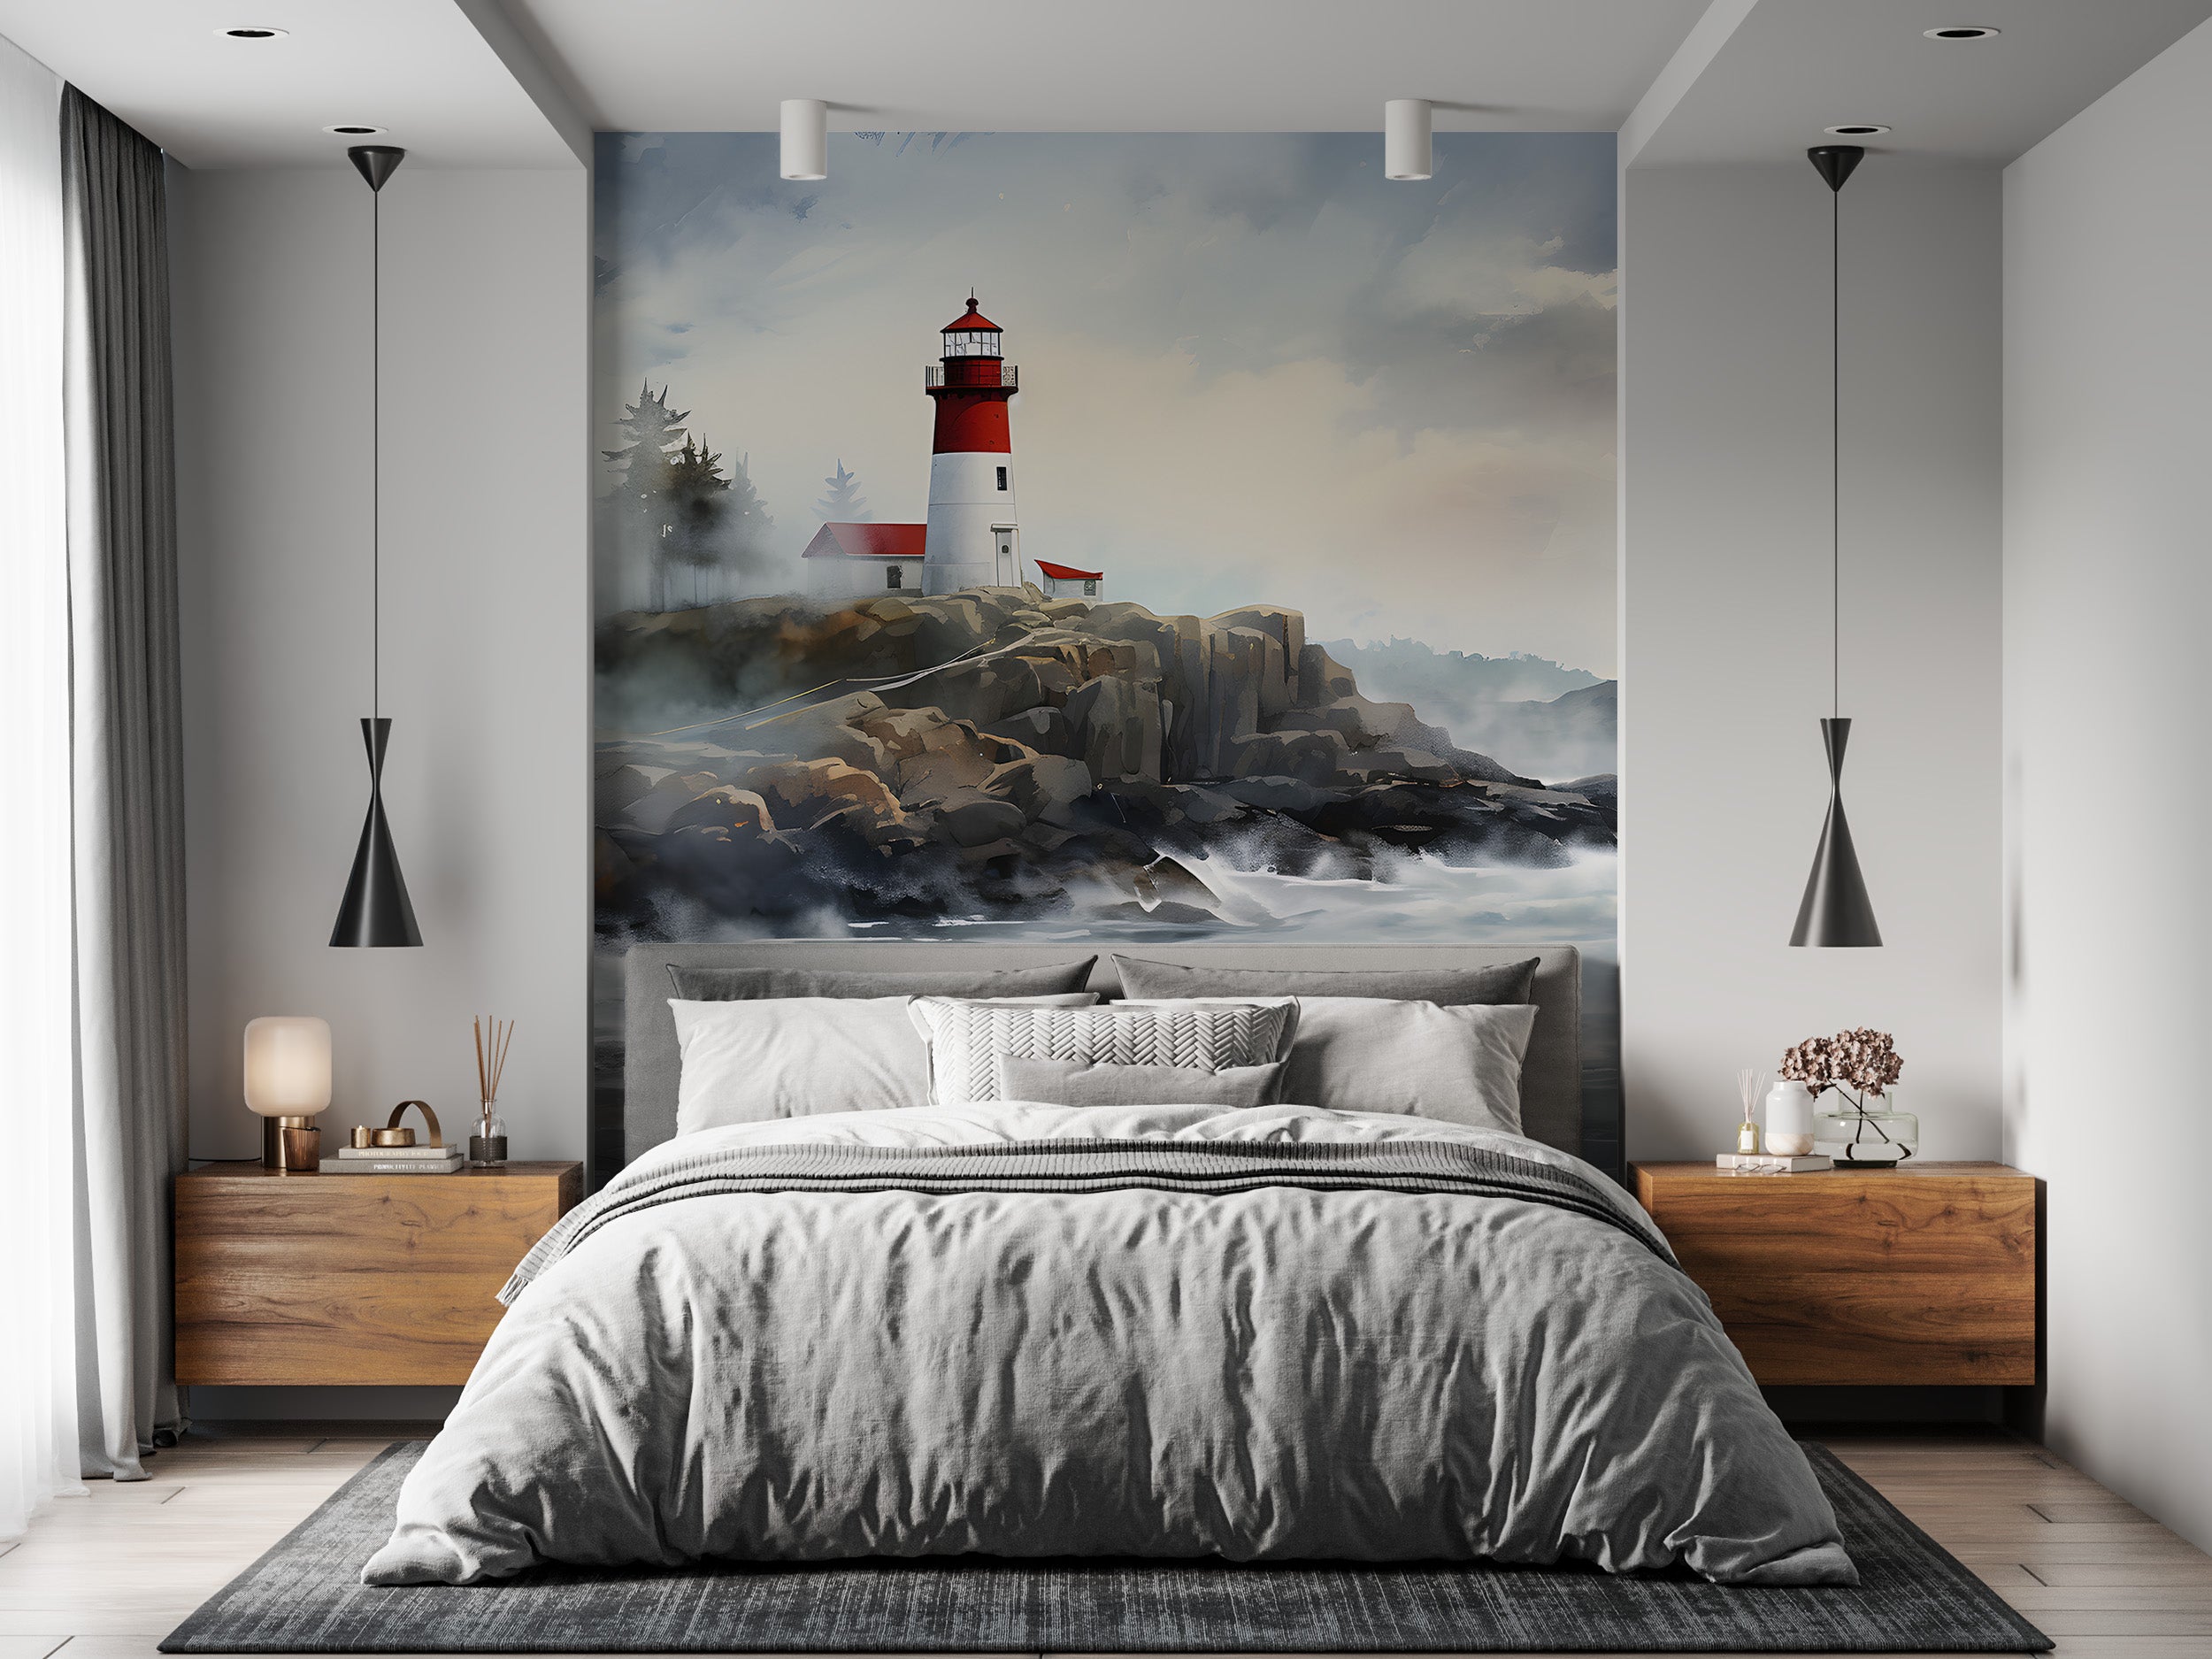 Stormy Coastal Scene Wall Art with Lighthouse